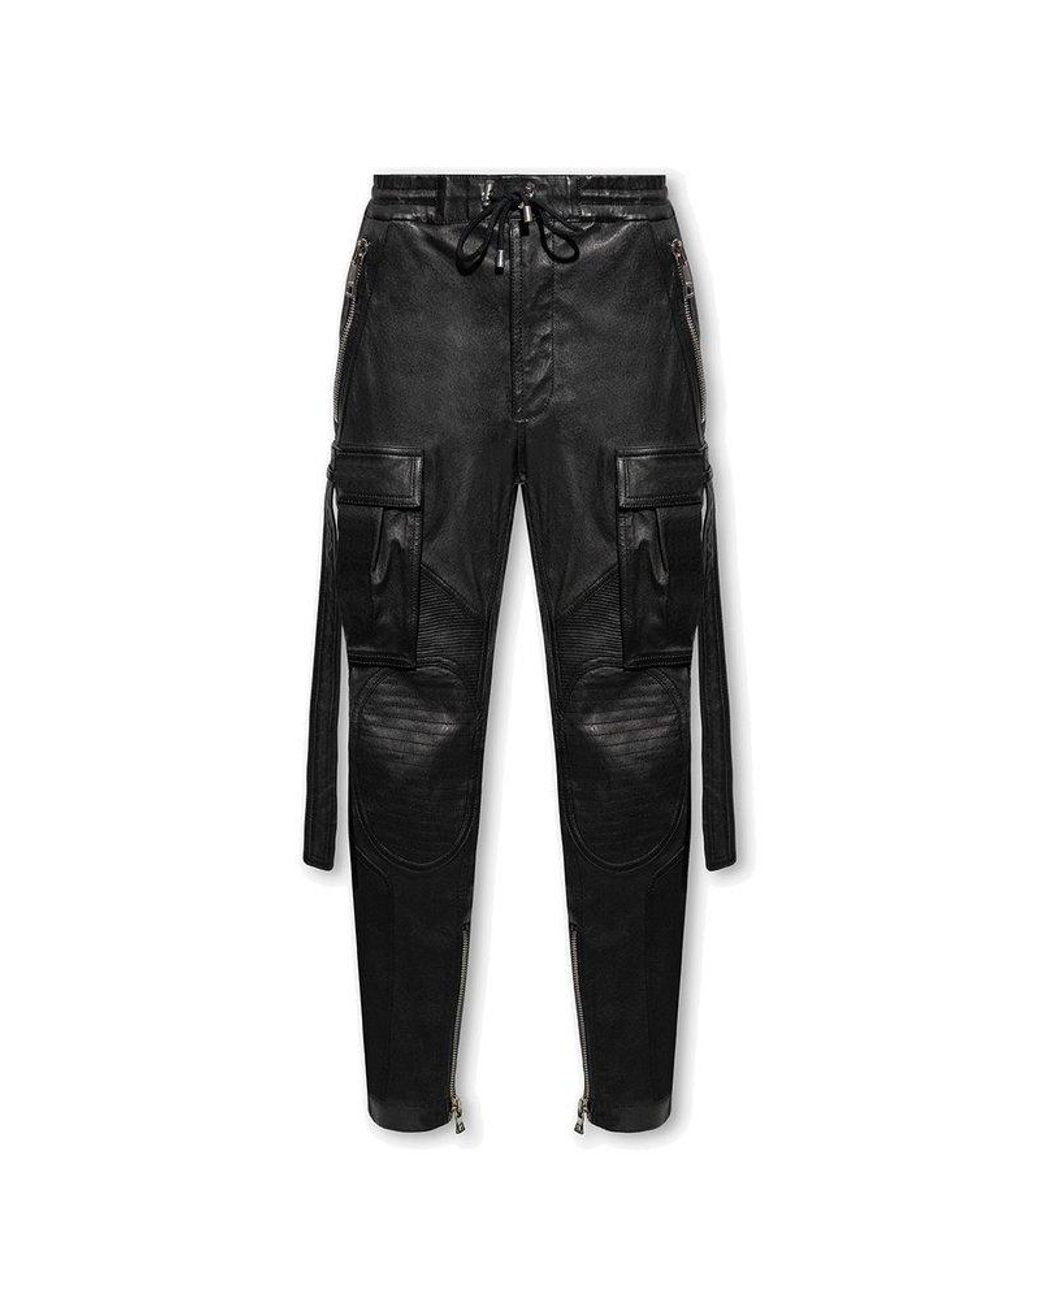 Balmain Leather Trousers in Black for Men | Lyst